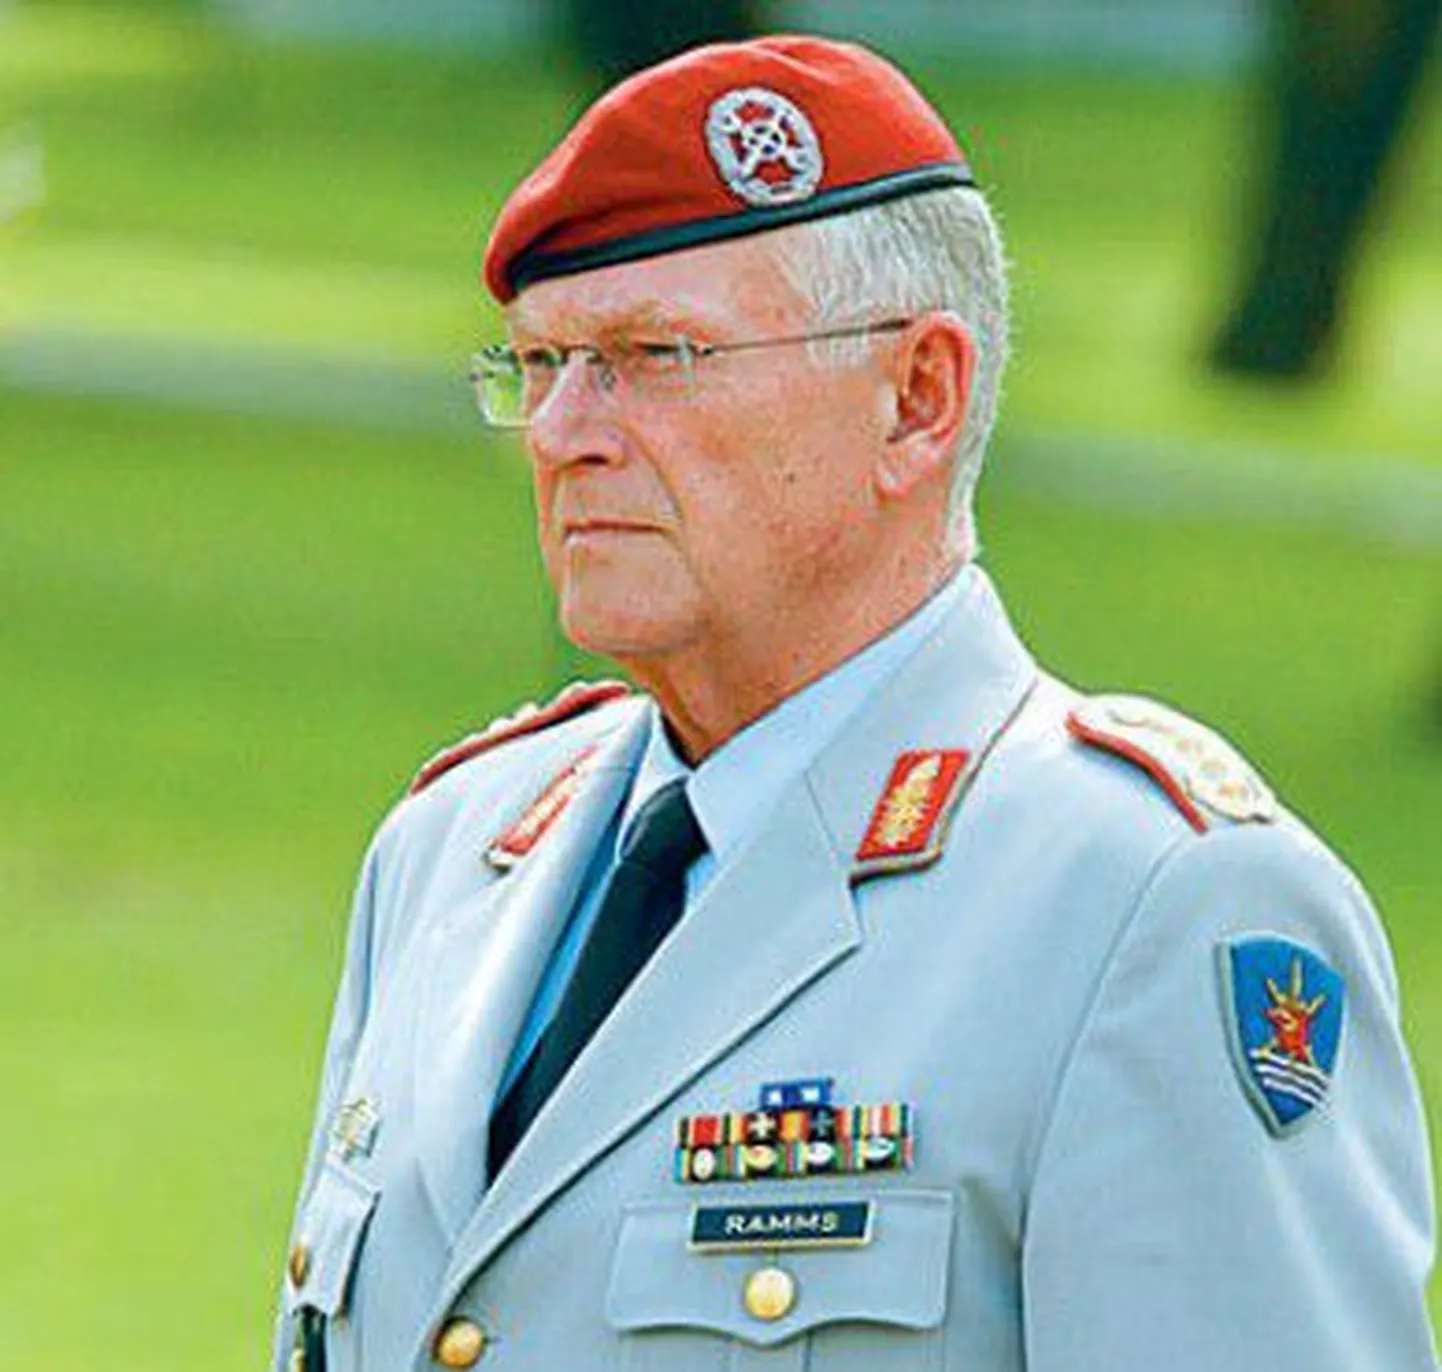 Balti riikide õhuturve korraldava Brunssumi juht kindral Egon Ramms.